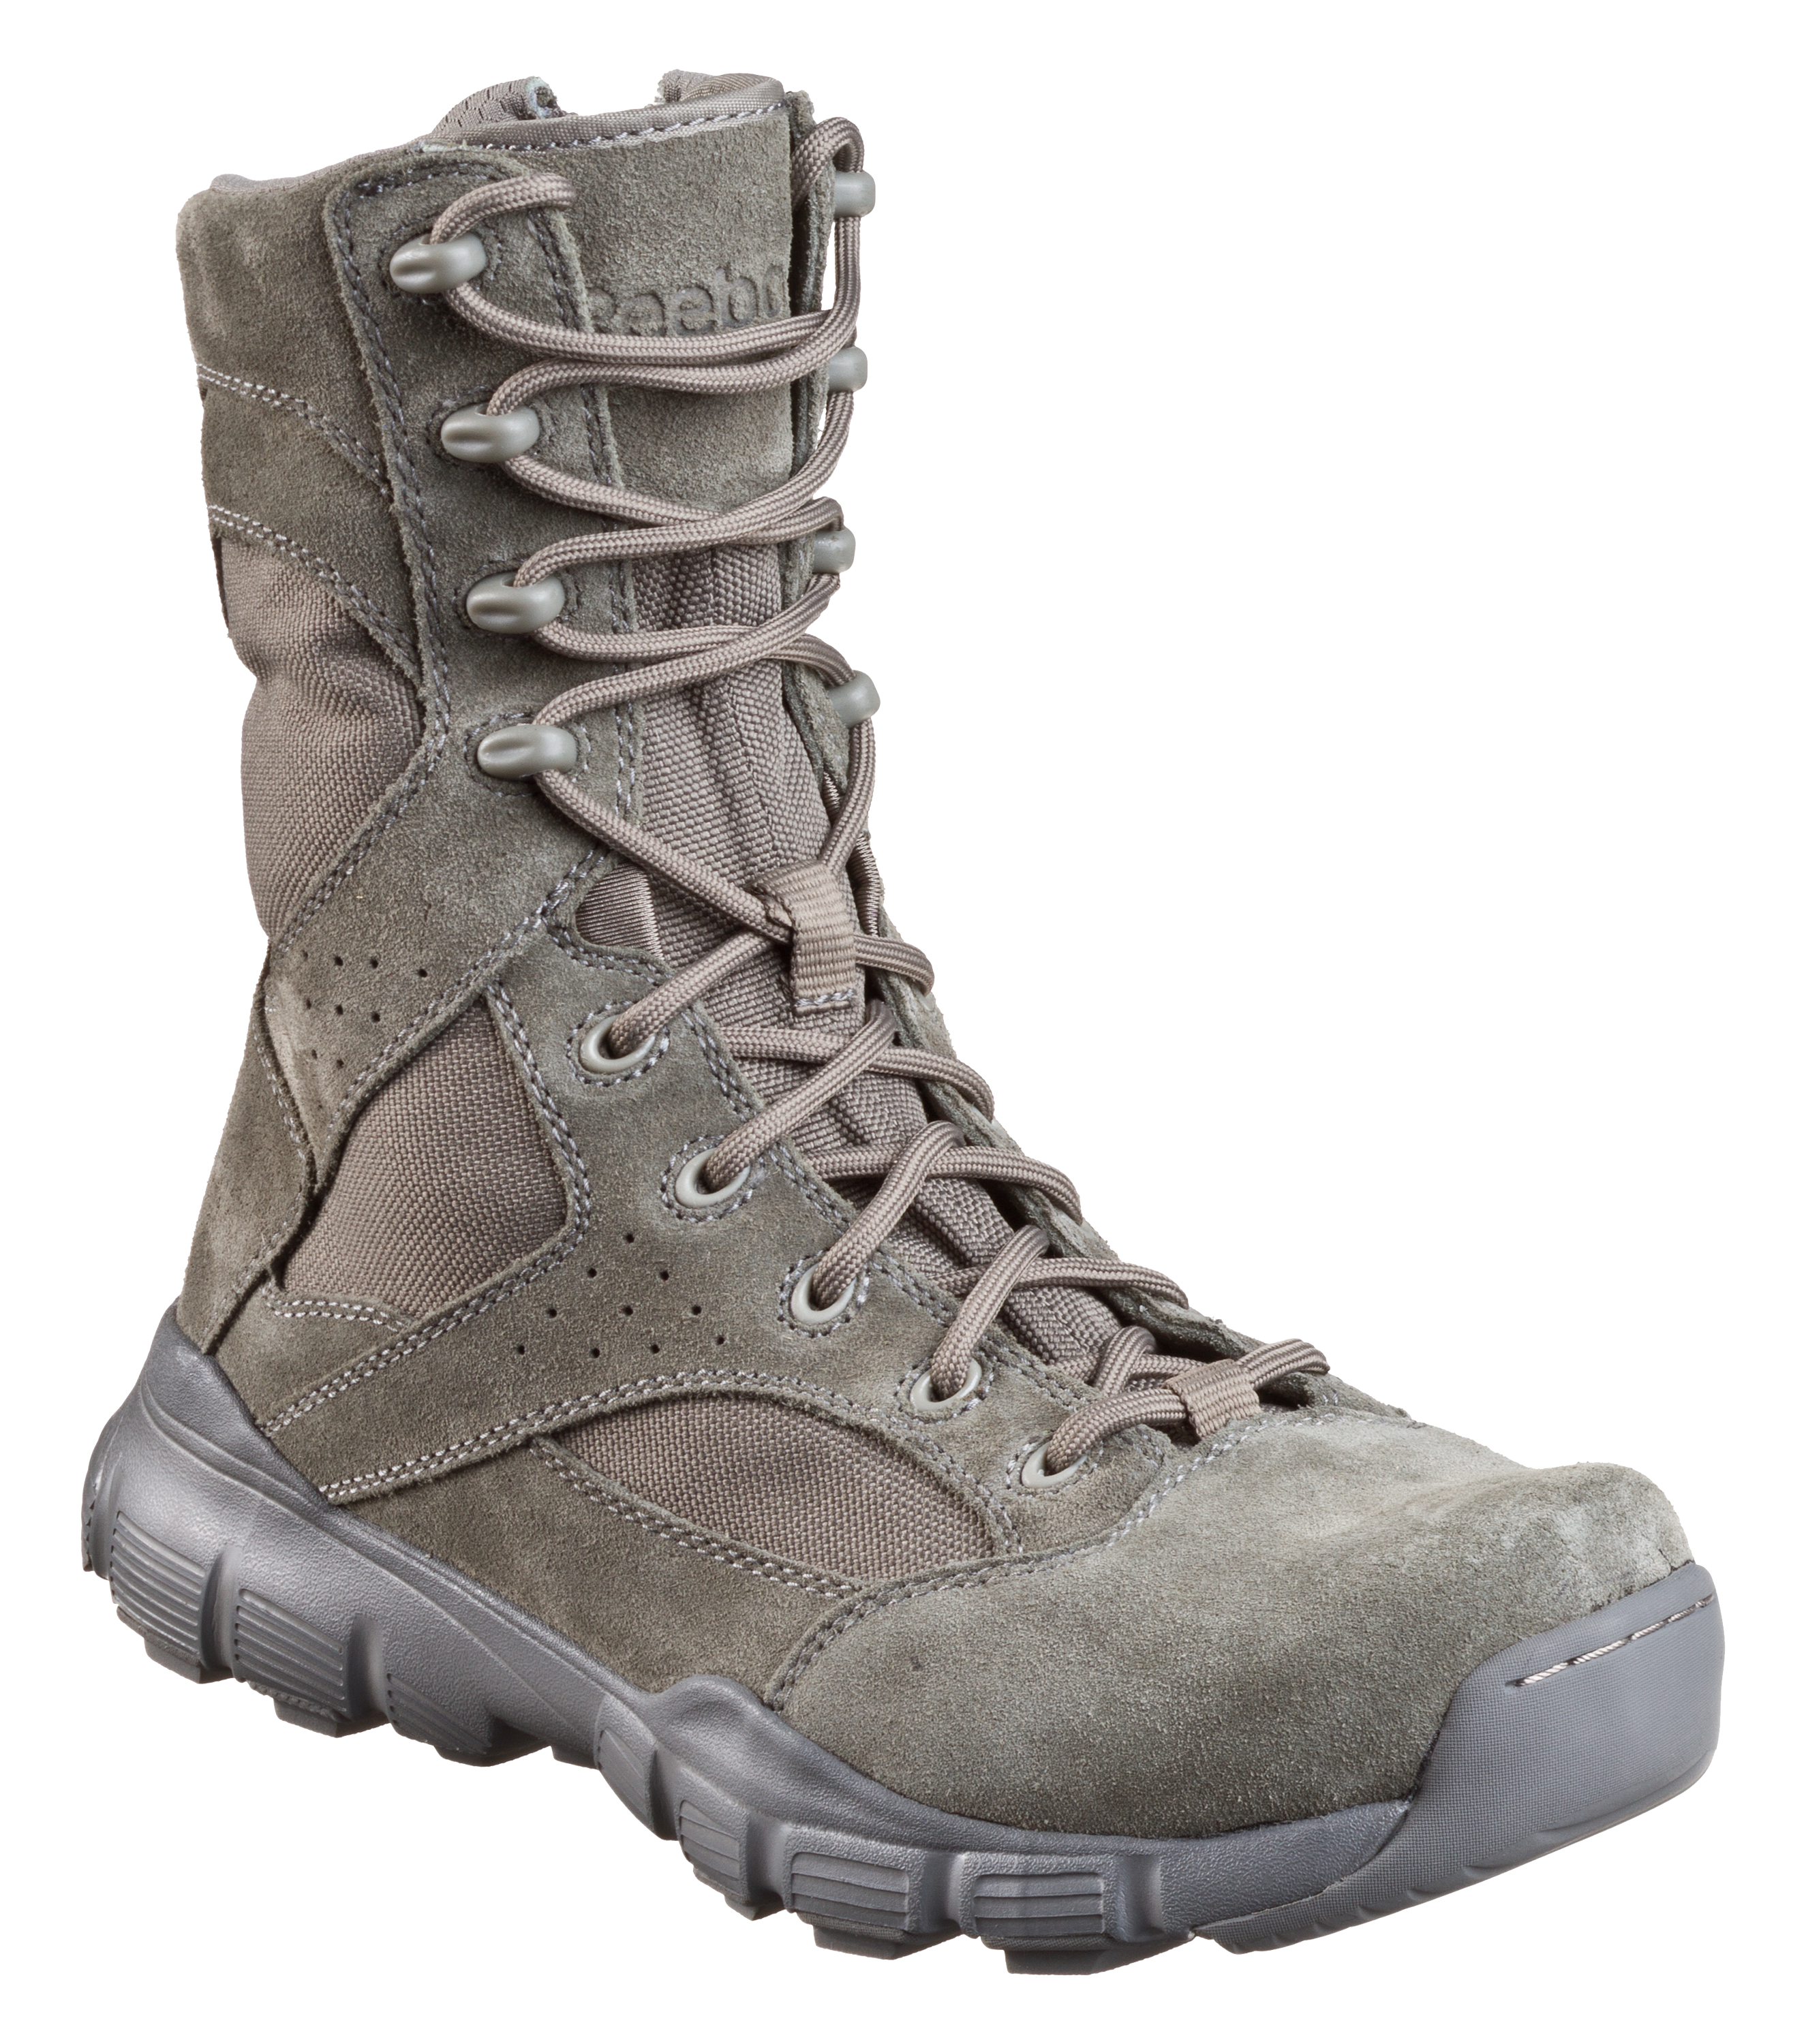 Reebok Dauntless Extreme Terrain Side Zip Tactical Boots for Men | Bass ...